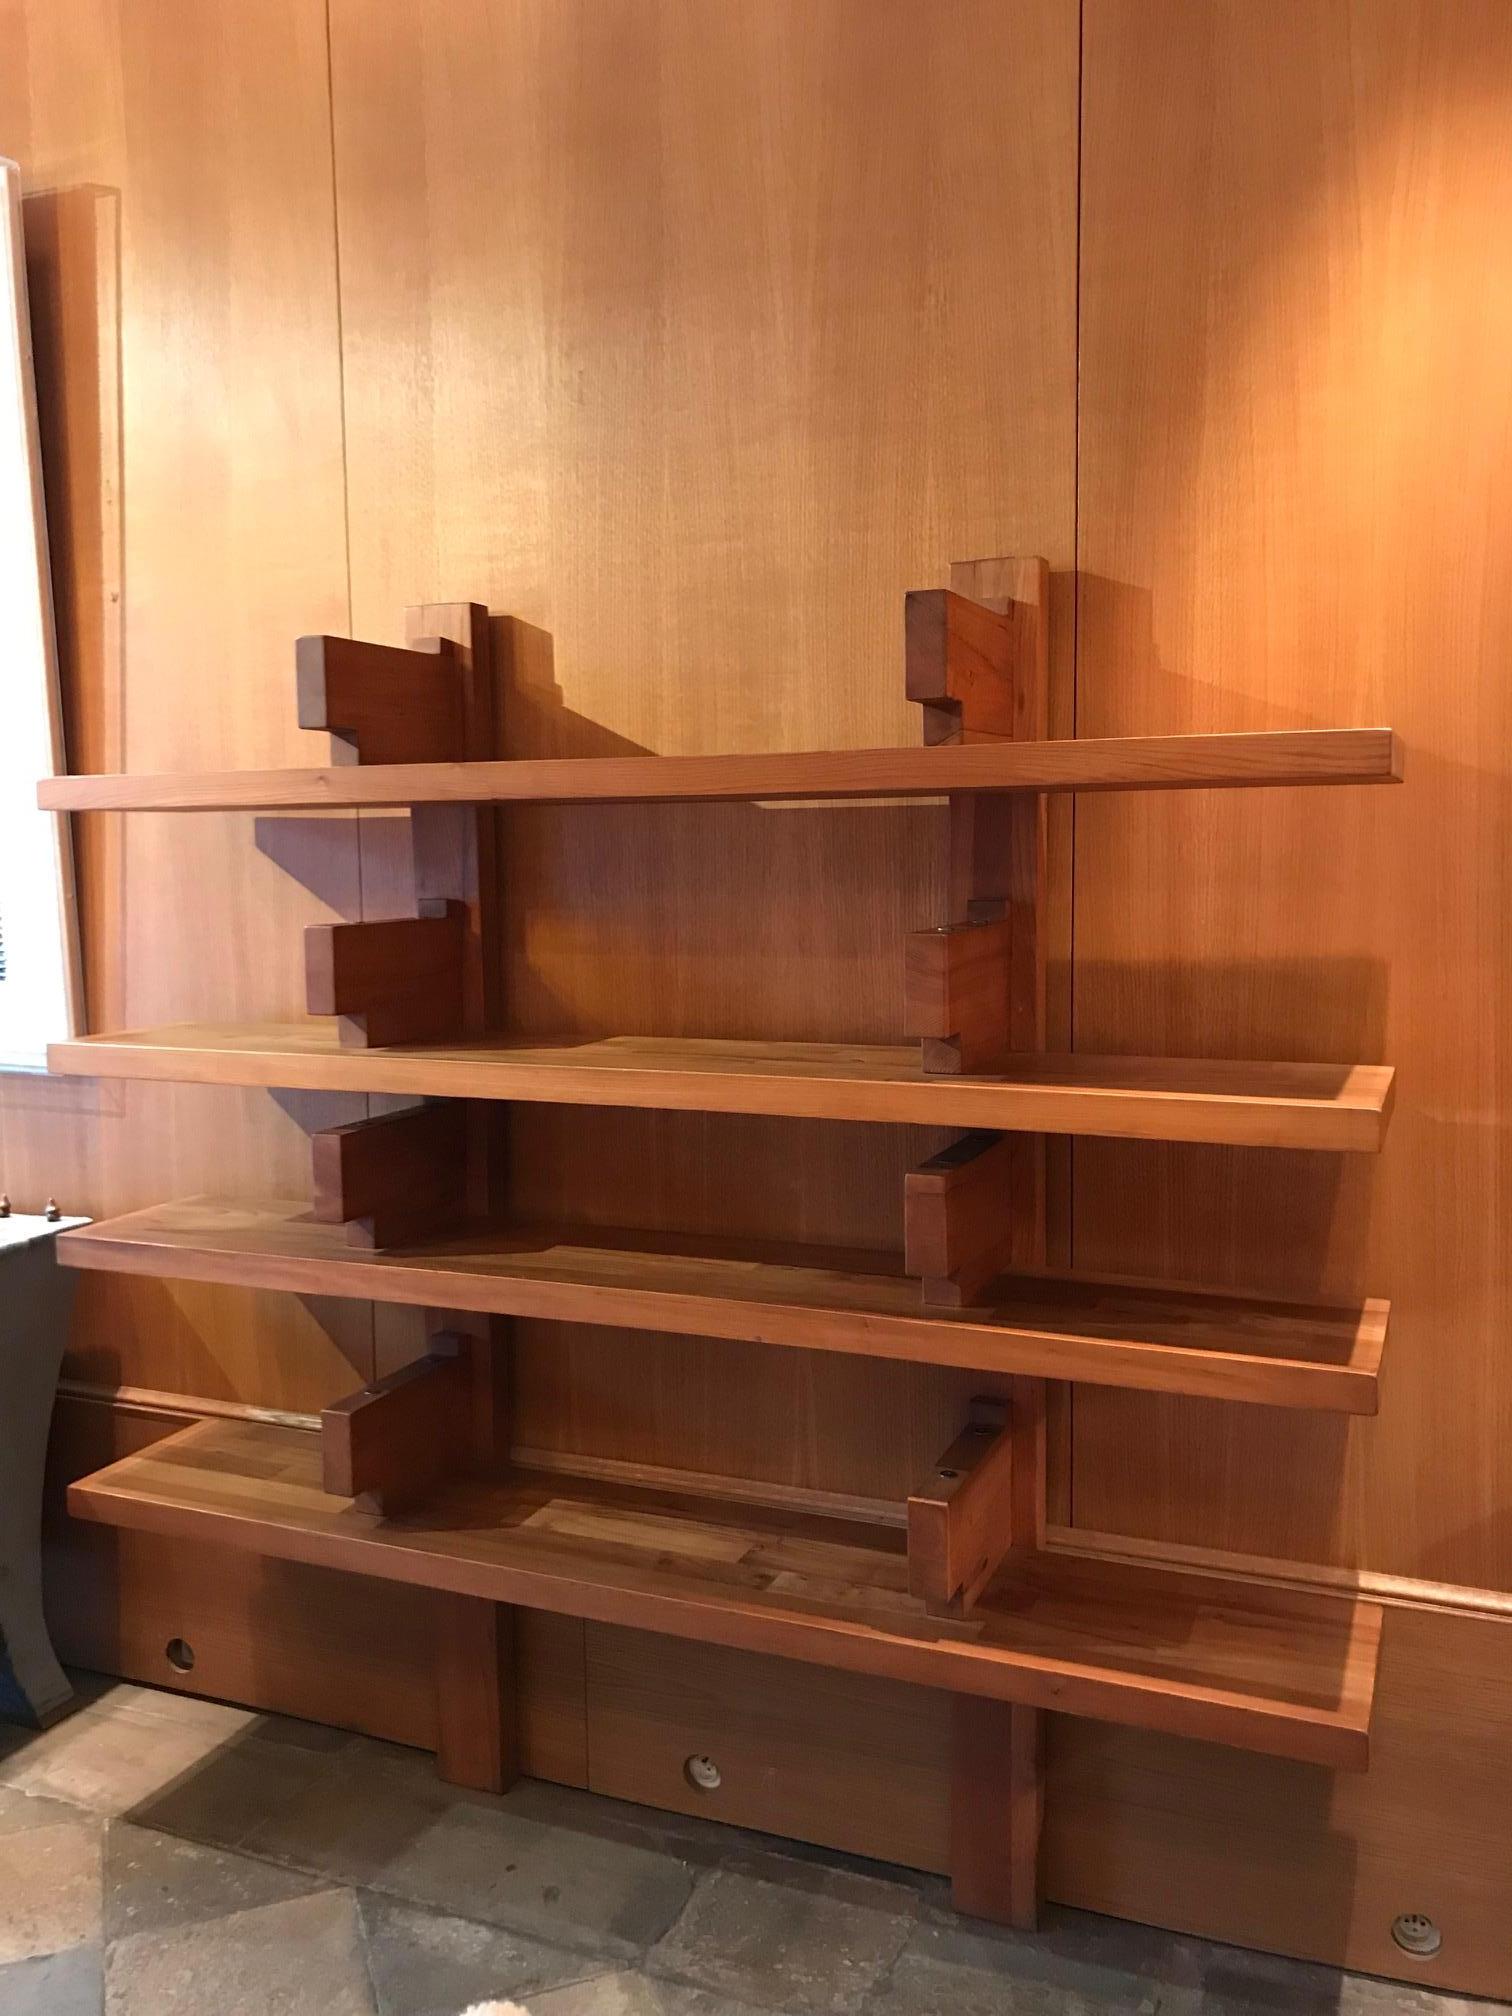 Wall-mounted elm bookshelves by Pierre Chapo, model B17a.